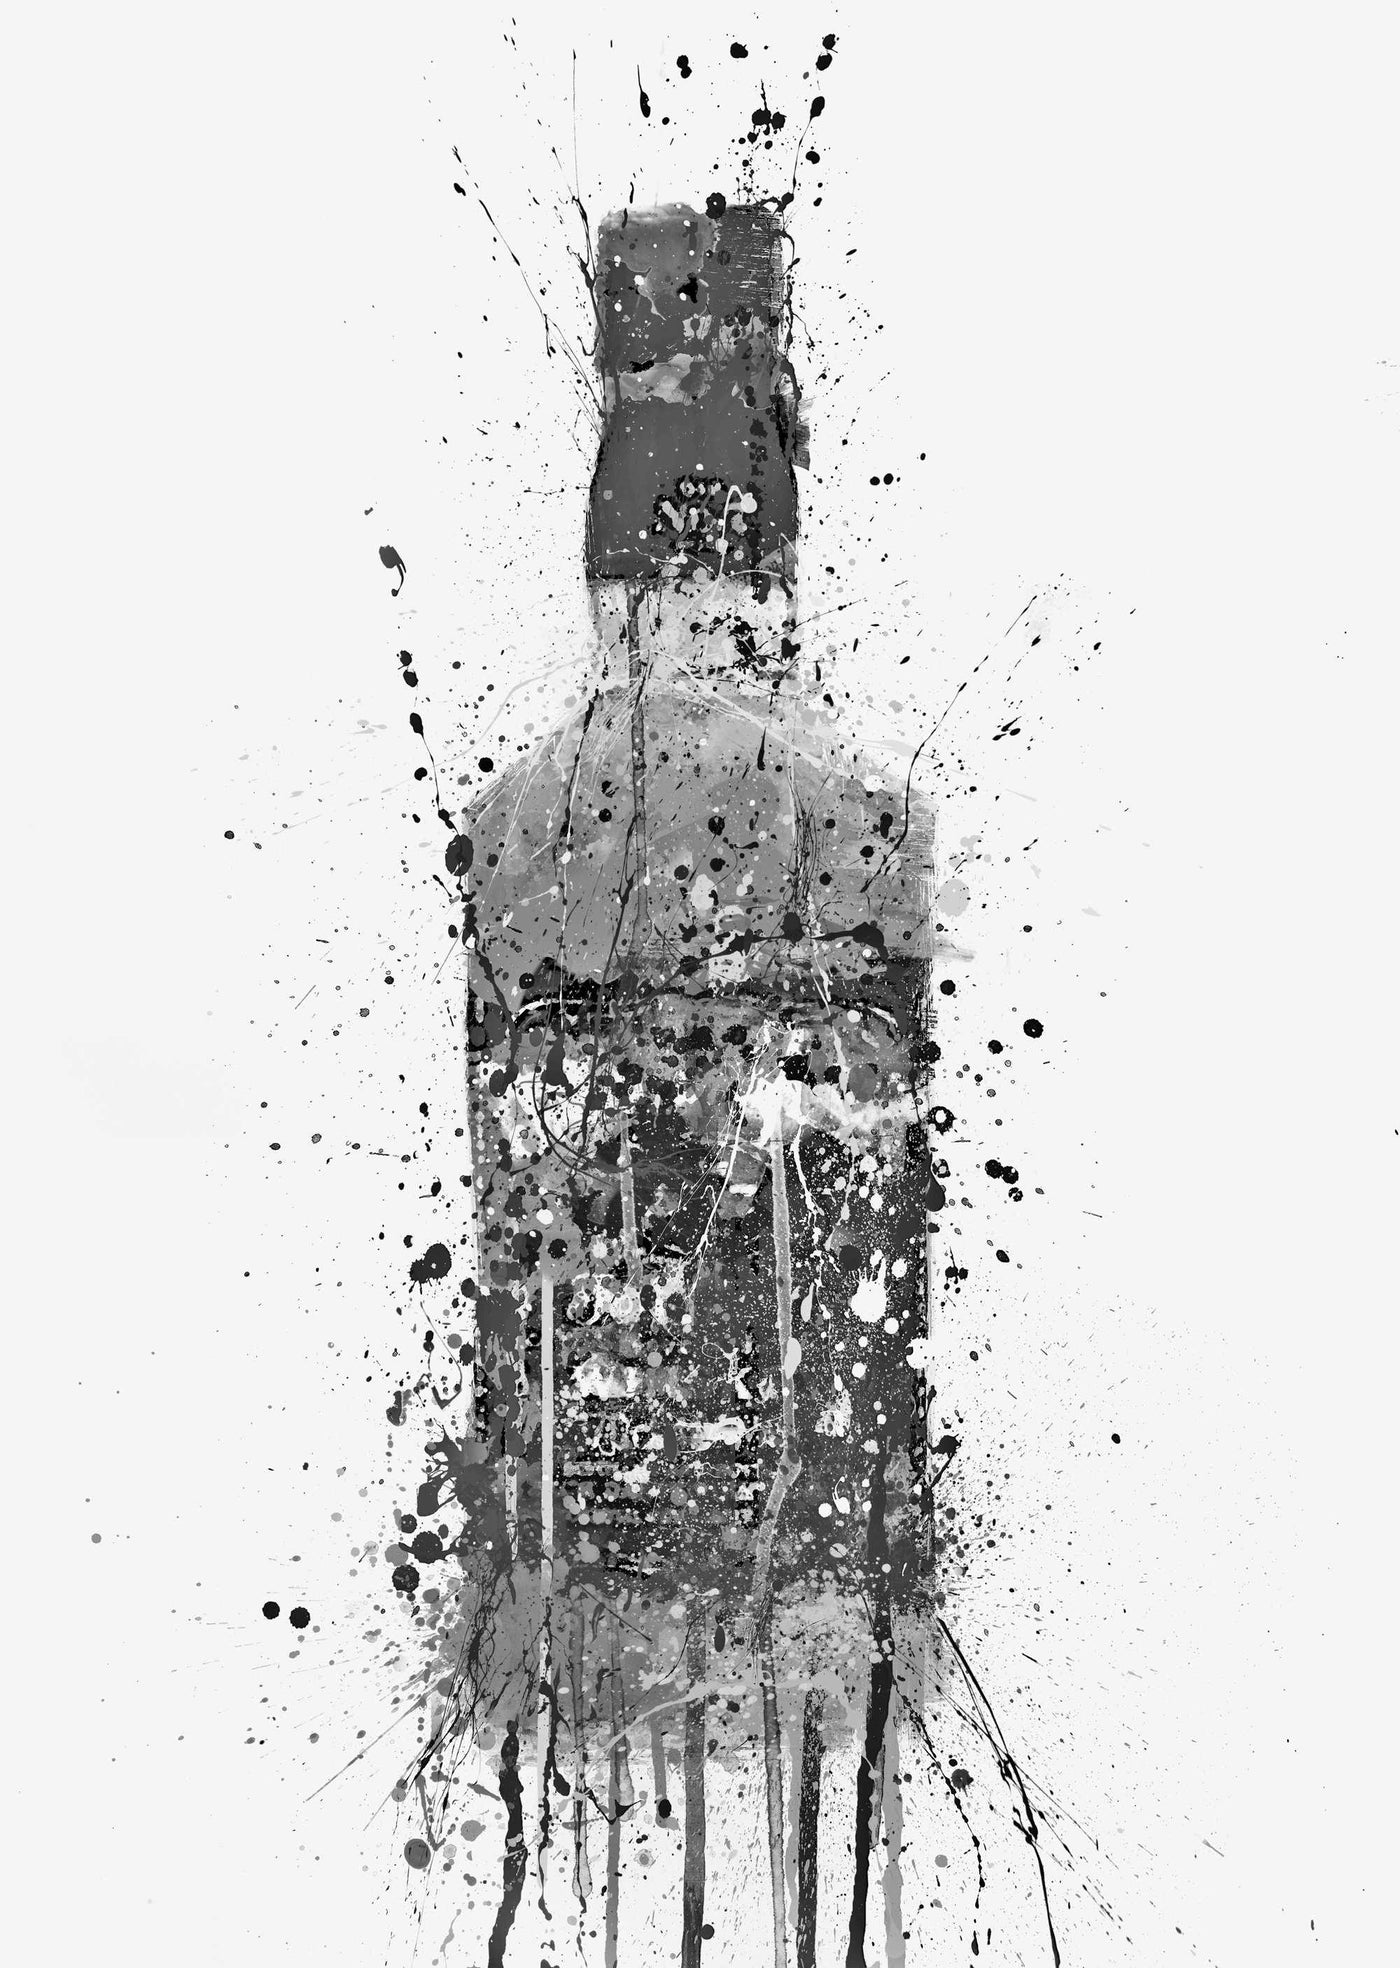 Whiskey Bottle Wall Art Print 'Umber' (Grey Edition)